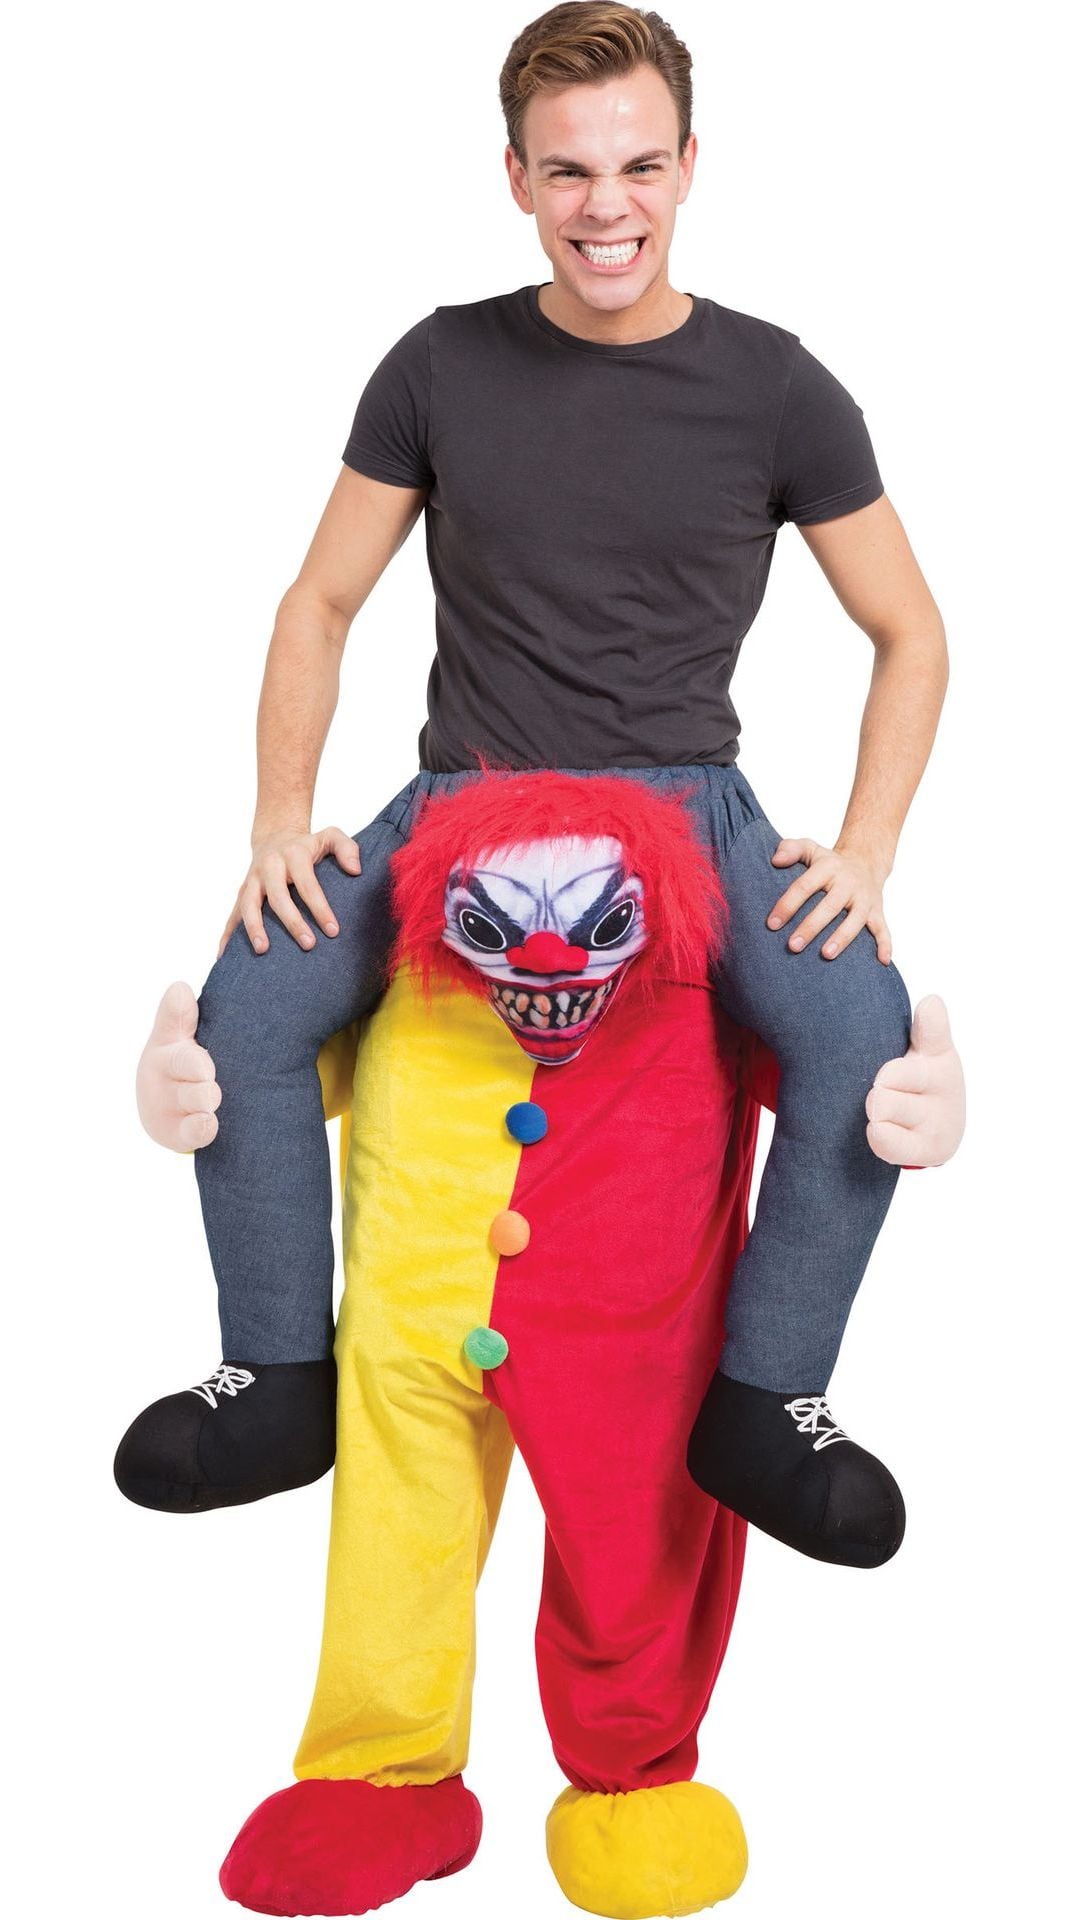 Instap killer clown kostuum